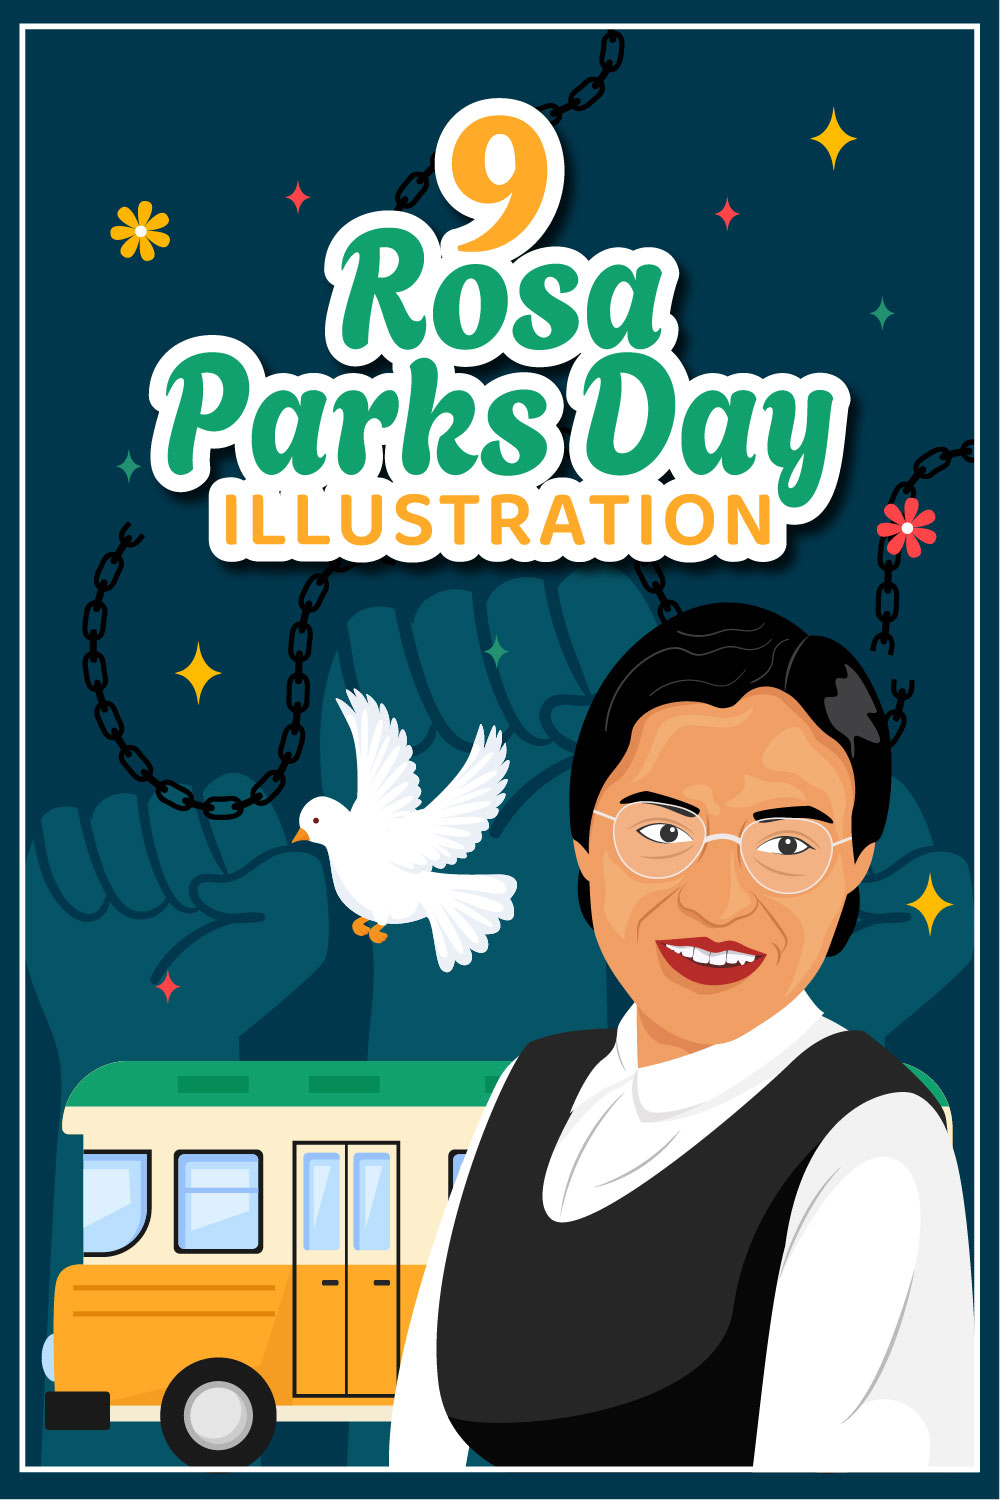 9 Rosa Parks Day Illustration pinterest preview image.